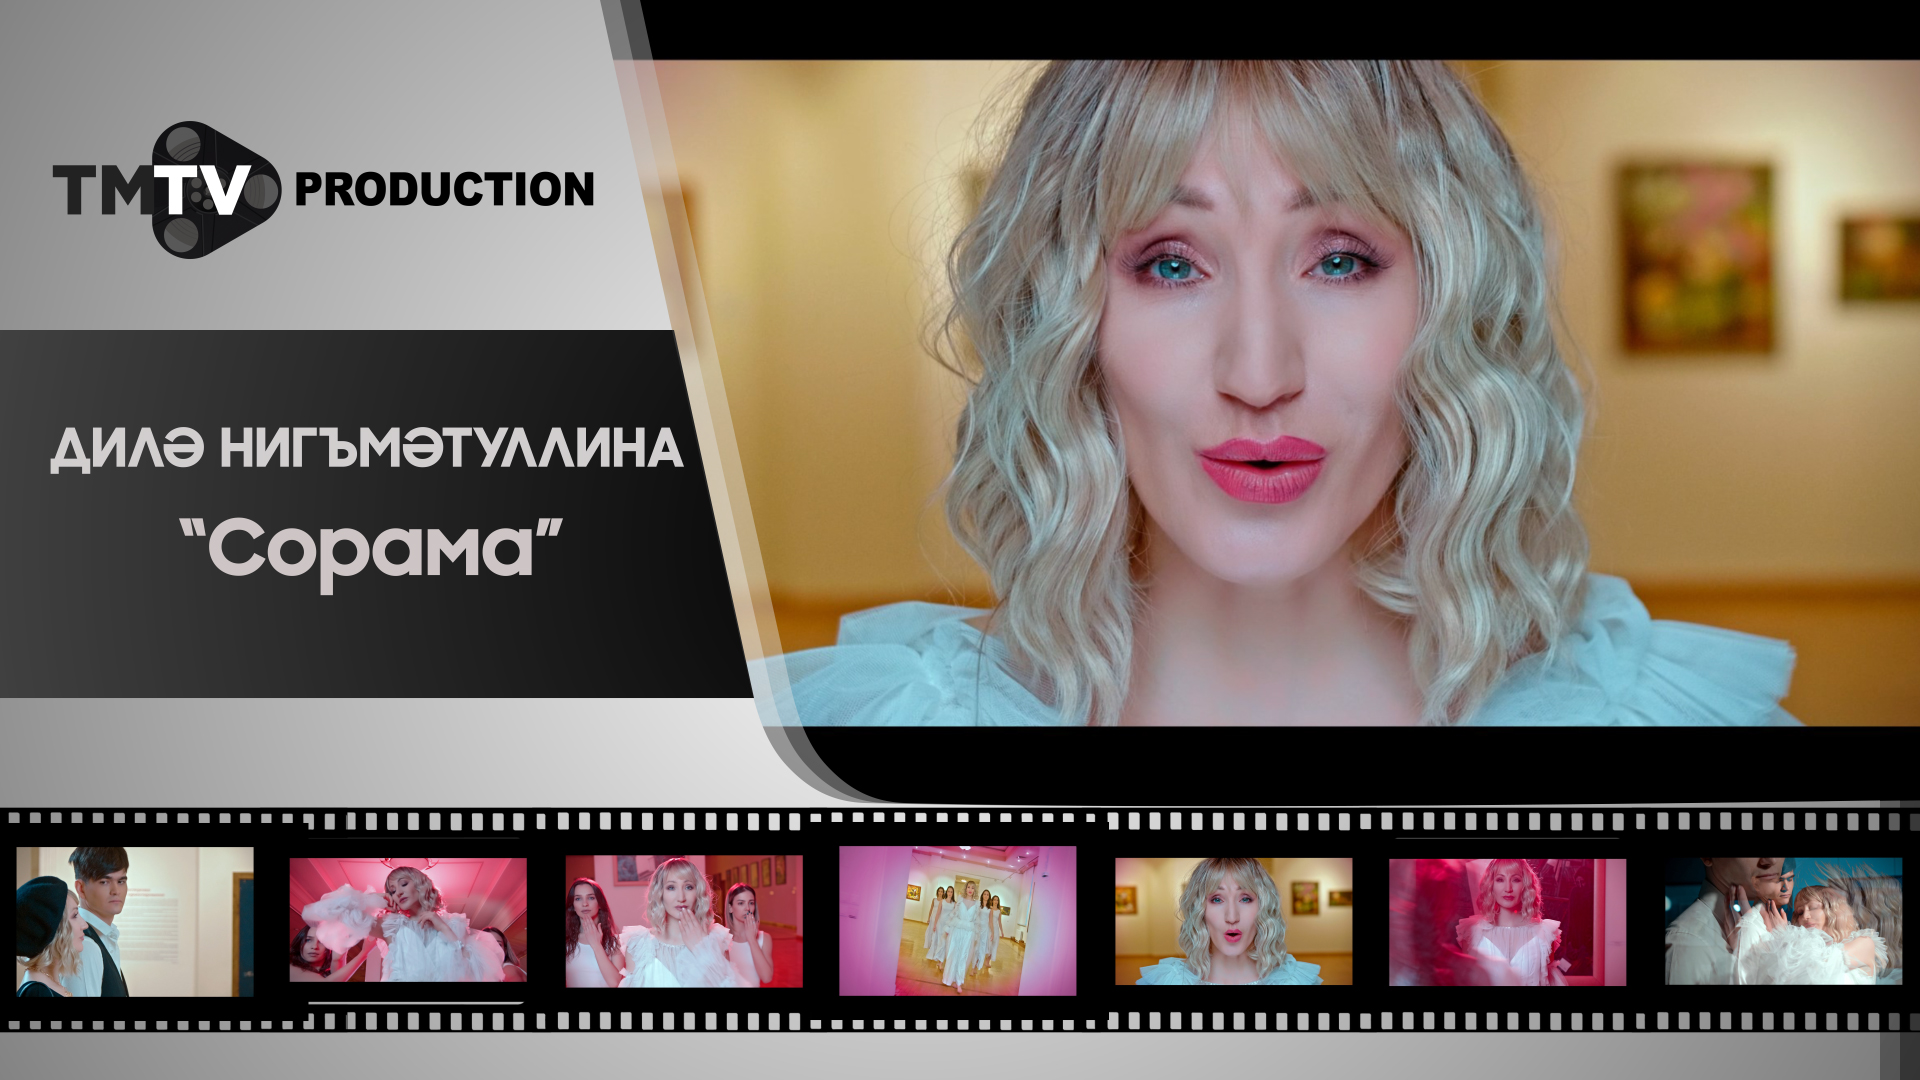 TMTV - татарский музыкальный телеканал. Страница 2. Смотрите видео онлайн,  бесплатно